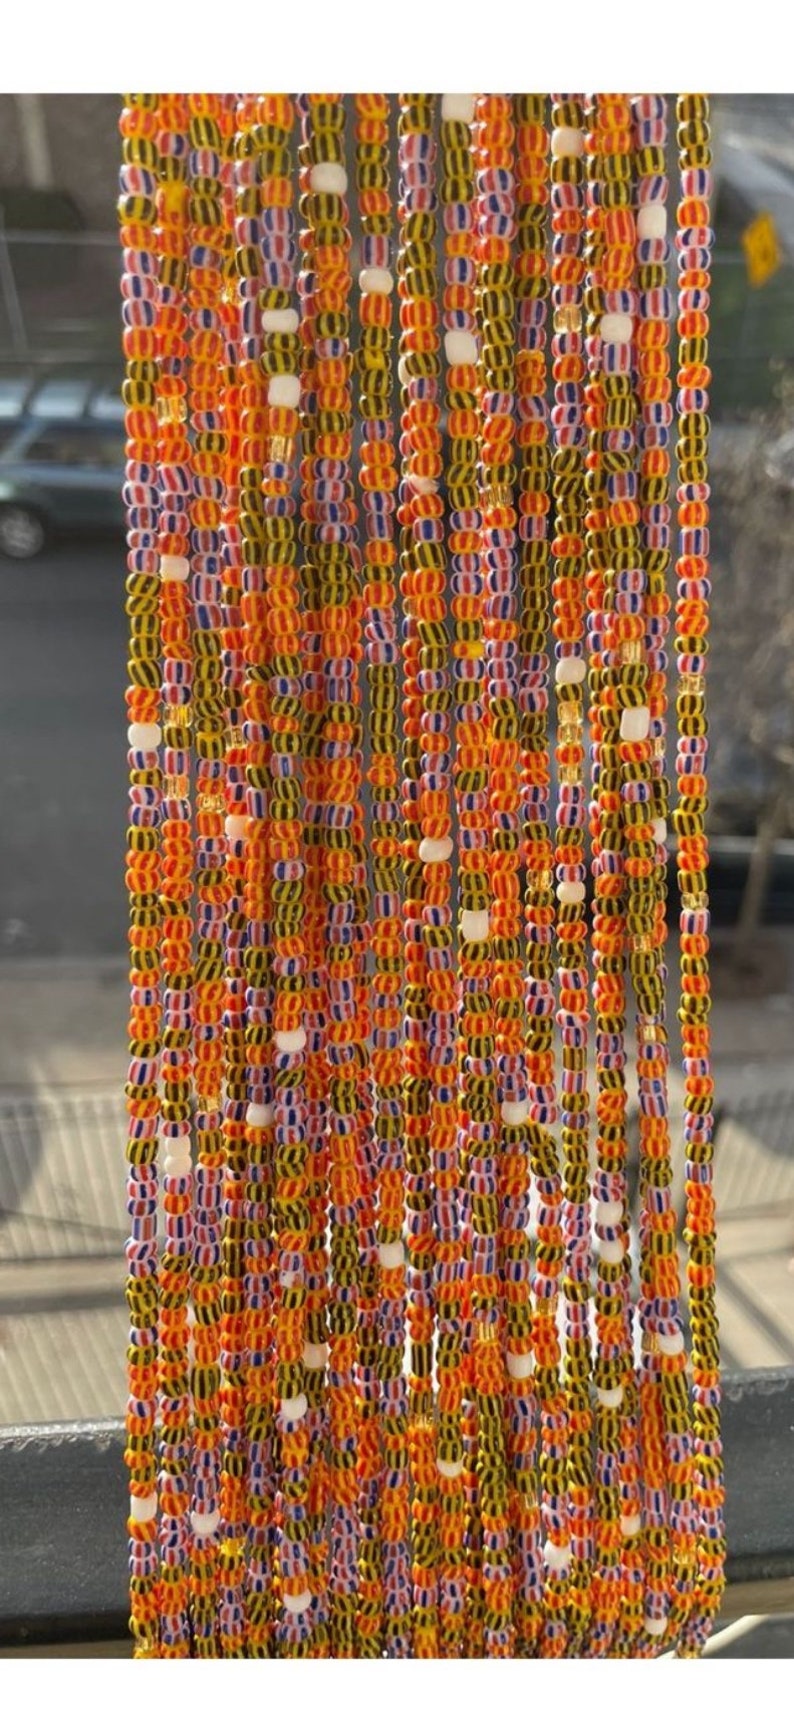 Ghana waist beads/ women waist beads/ African waist beads/ waist beads/ tie on waist beads/ up 50 inches long. Earthly tone